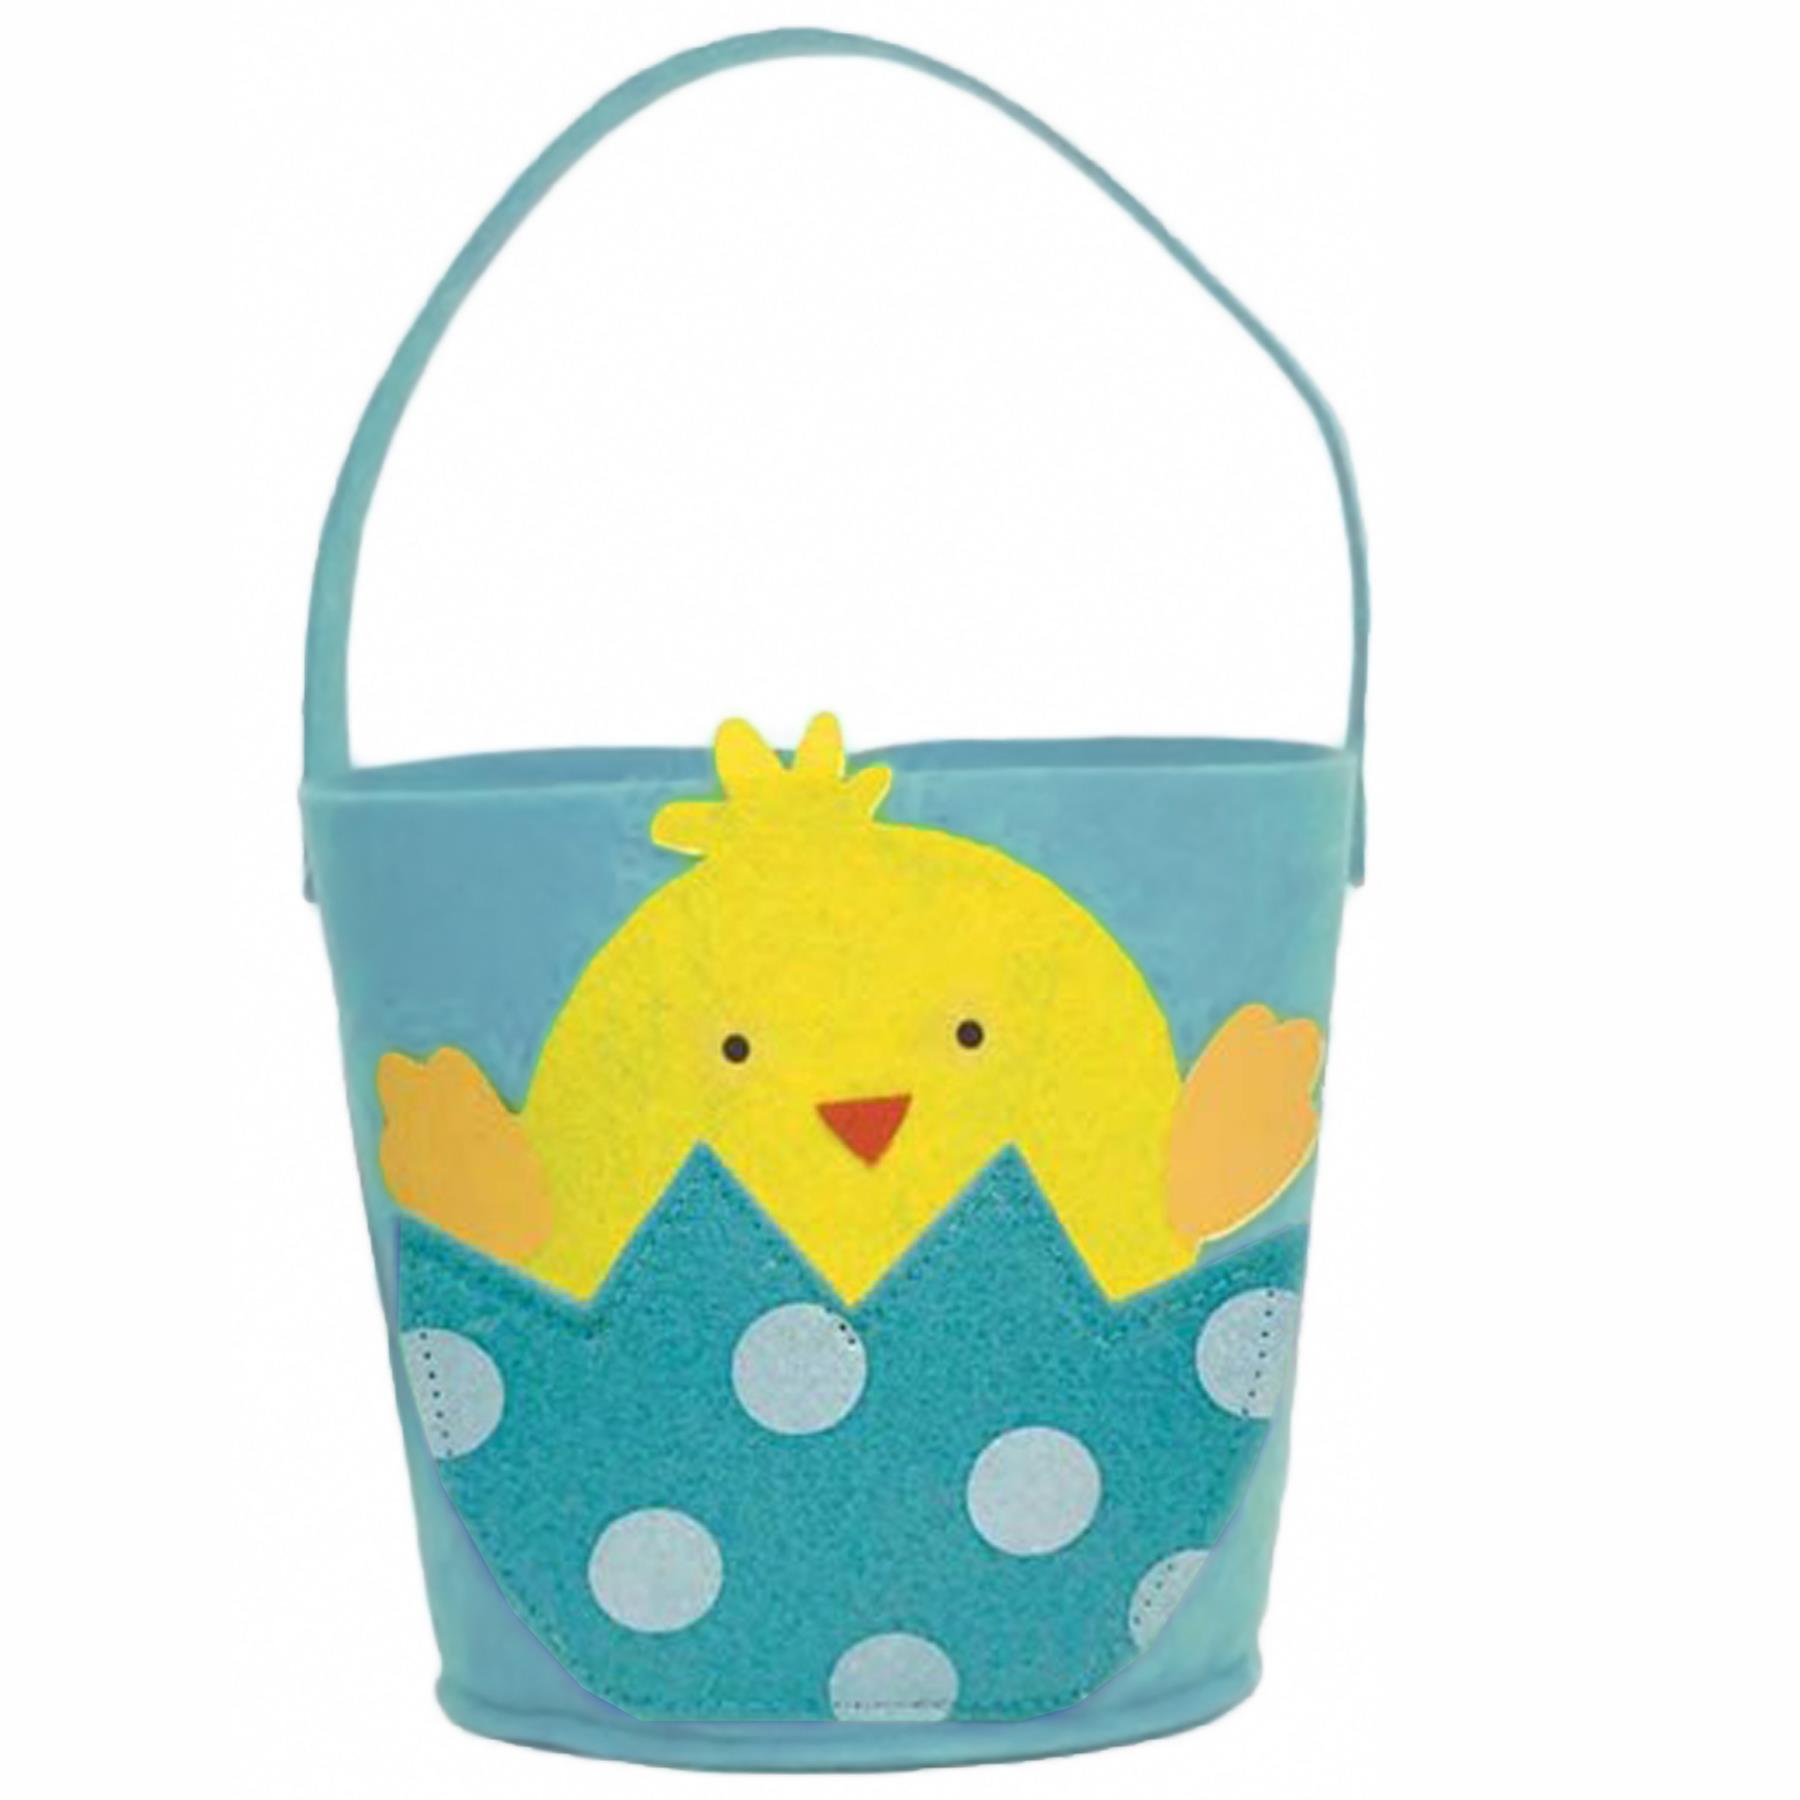 Easter Baskets, Buckets, Egg Hunt Accessories - Felt Bucket Blue Chick